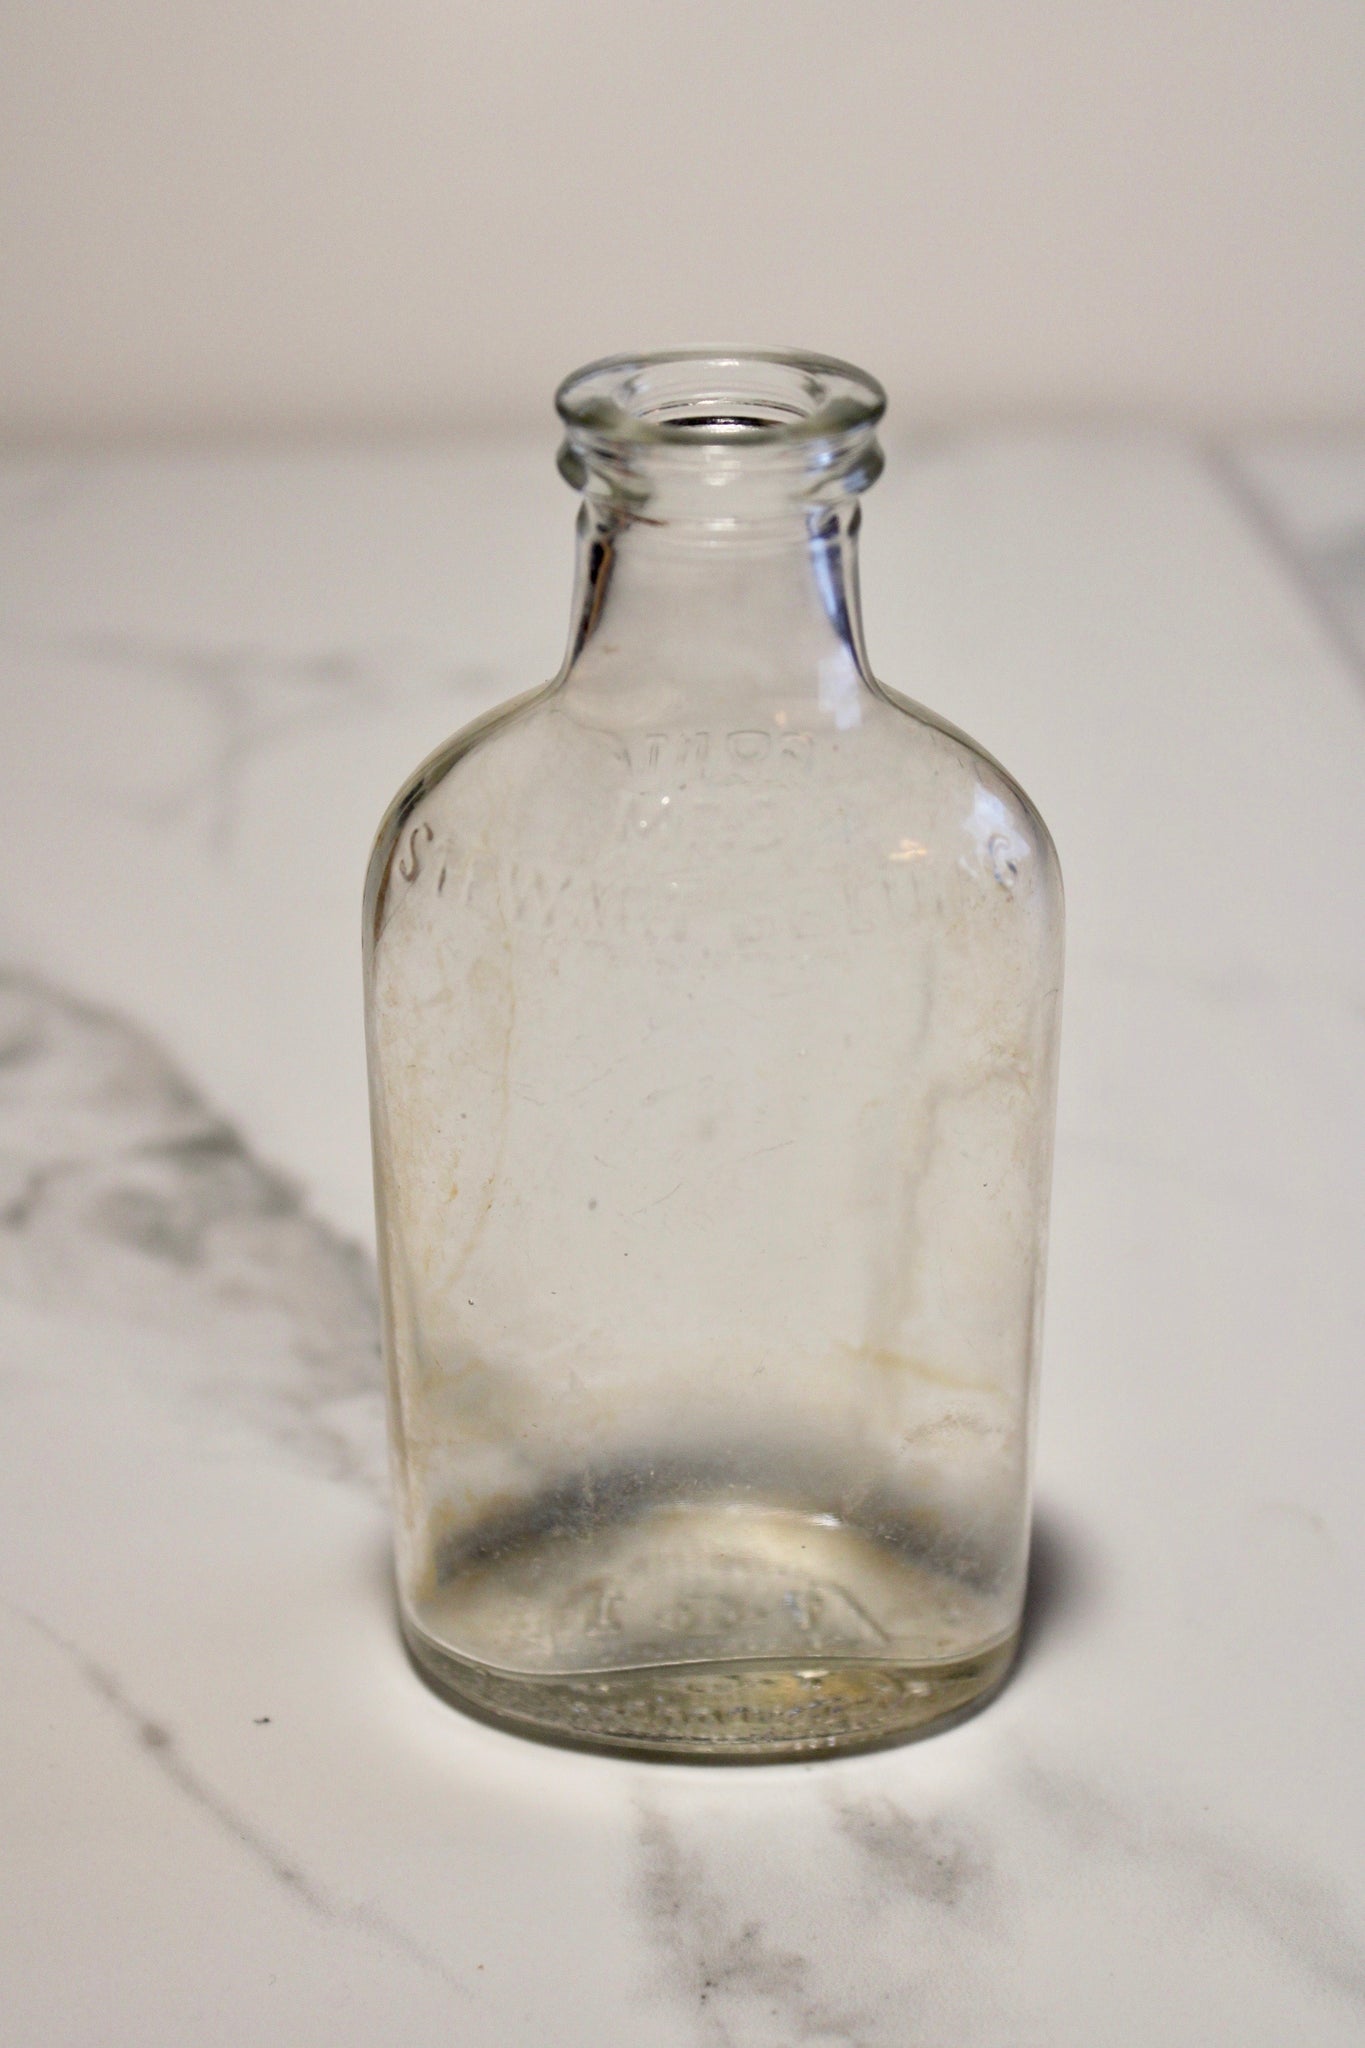 Mrs Stewart's Liquid Bluing Bottle from the 1930's